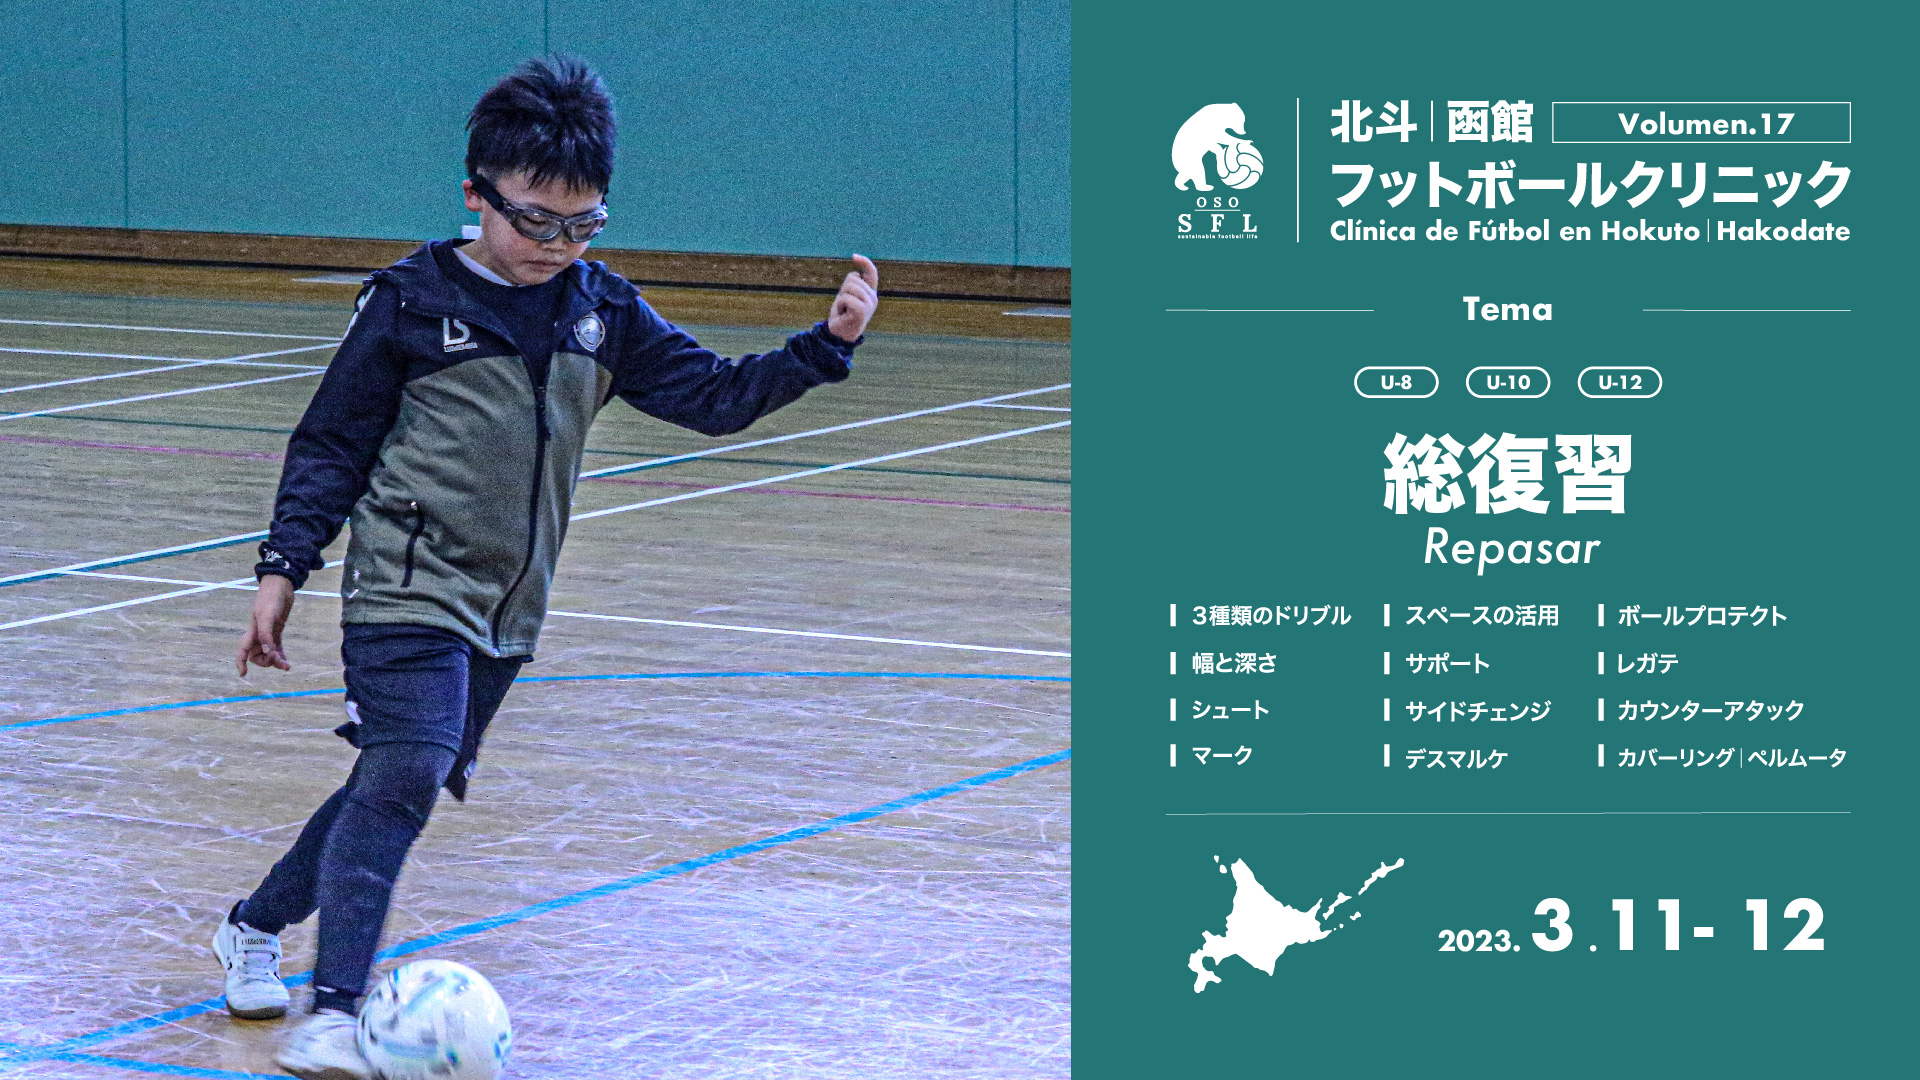 20230228_notice-hokuto-hakodate-football-clinic-2023-vol17_1920px